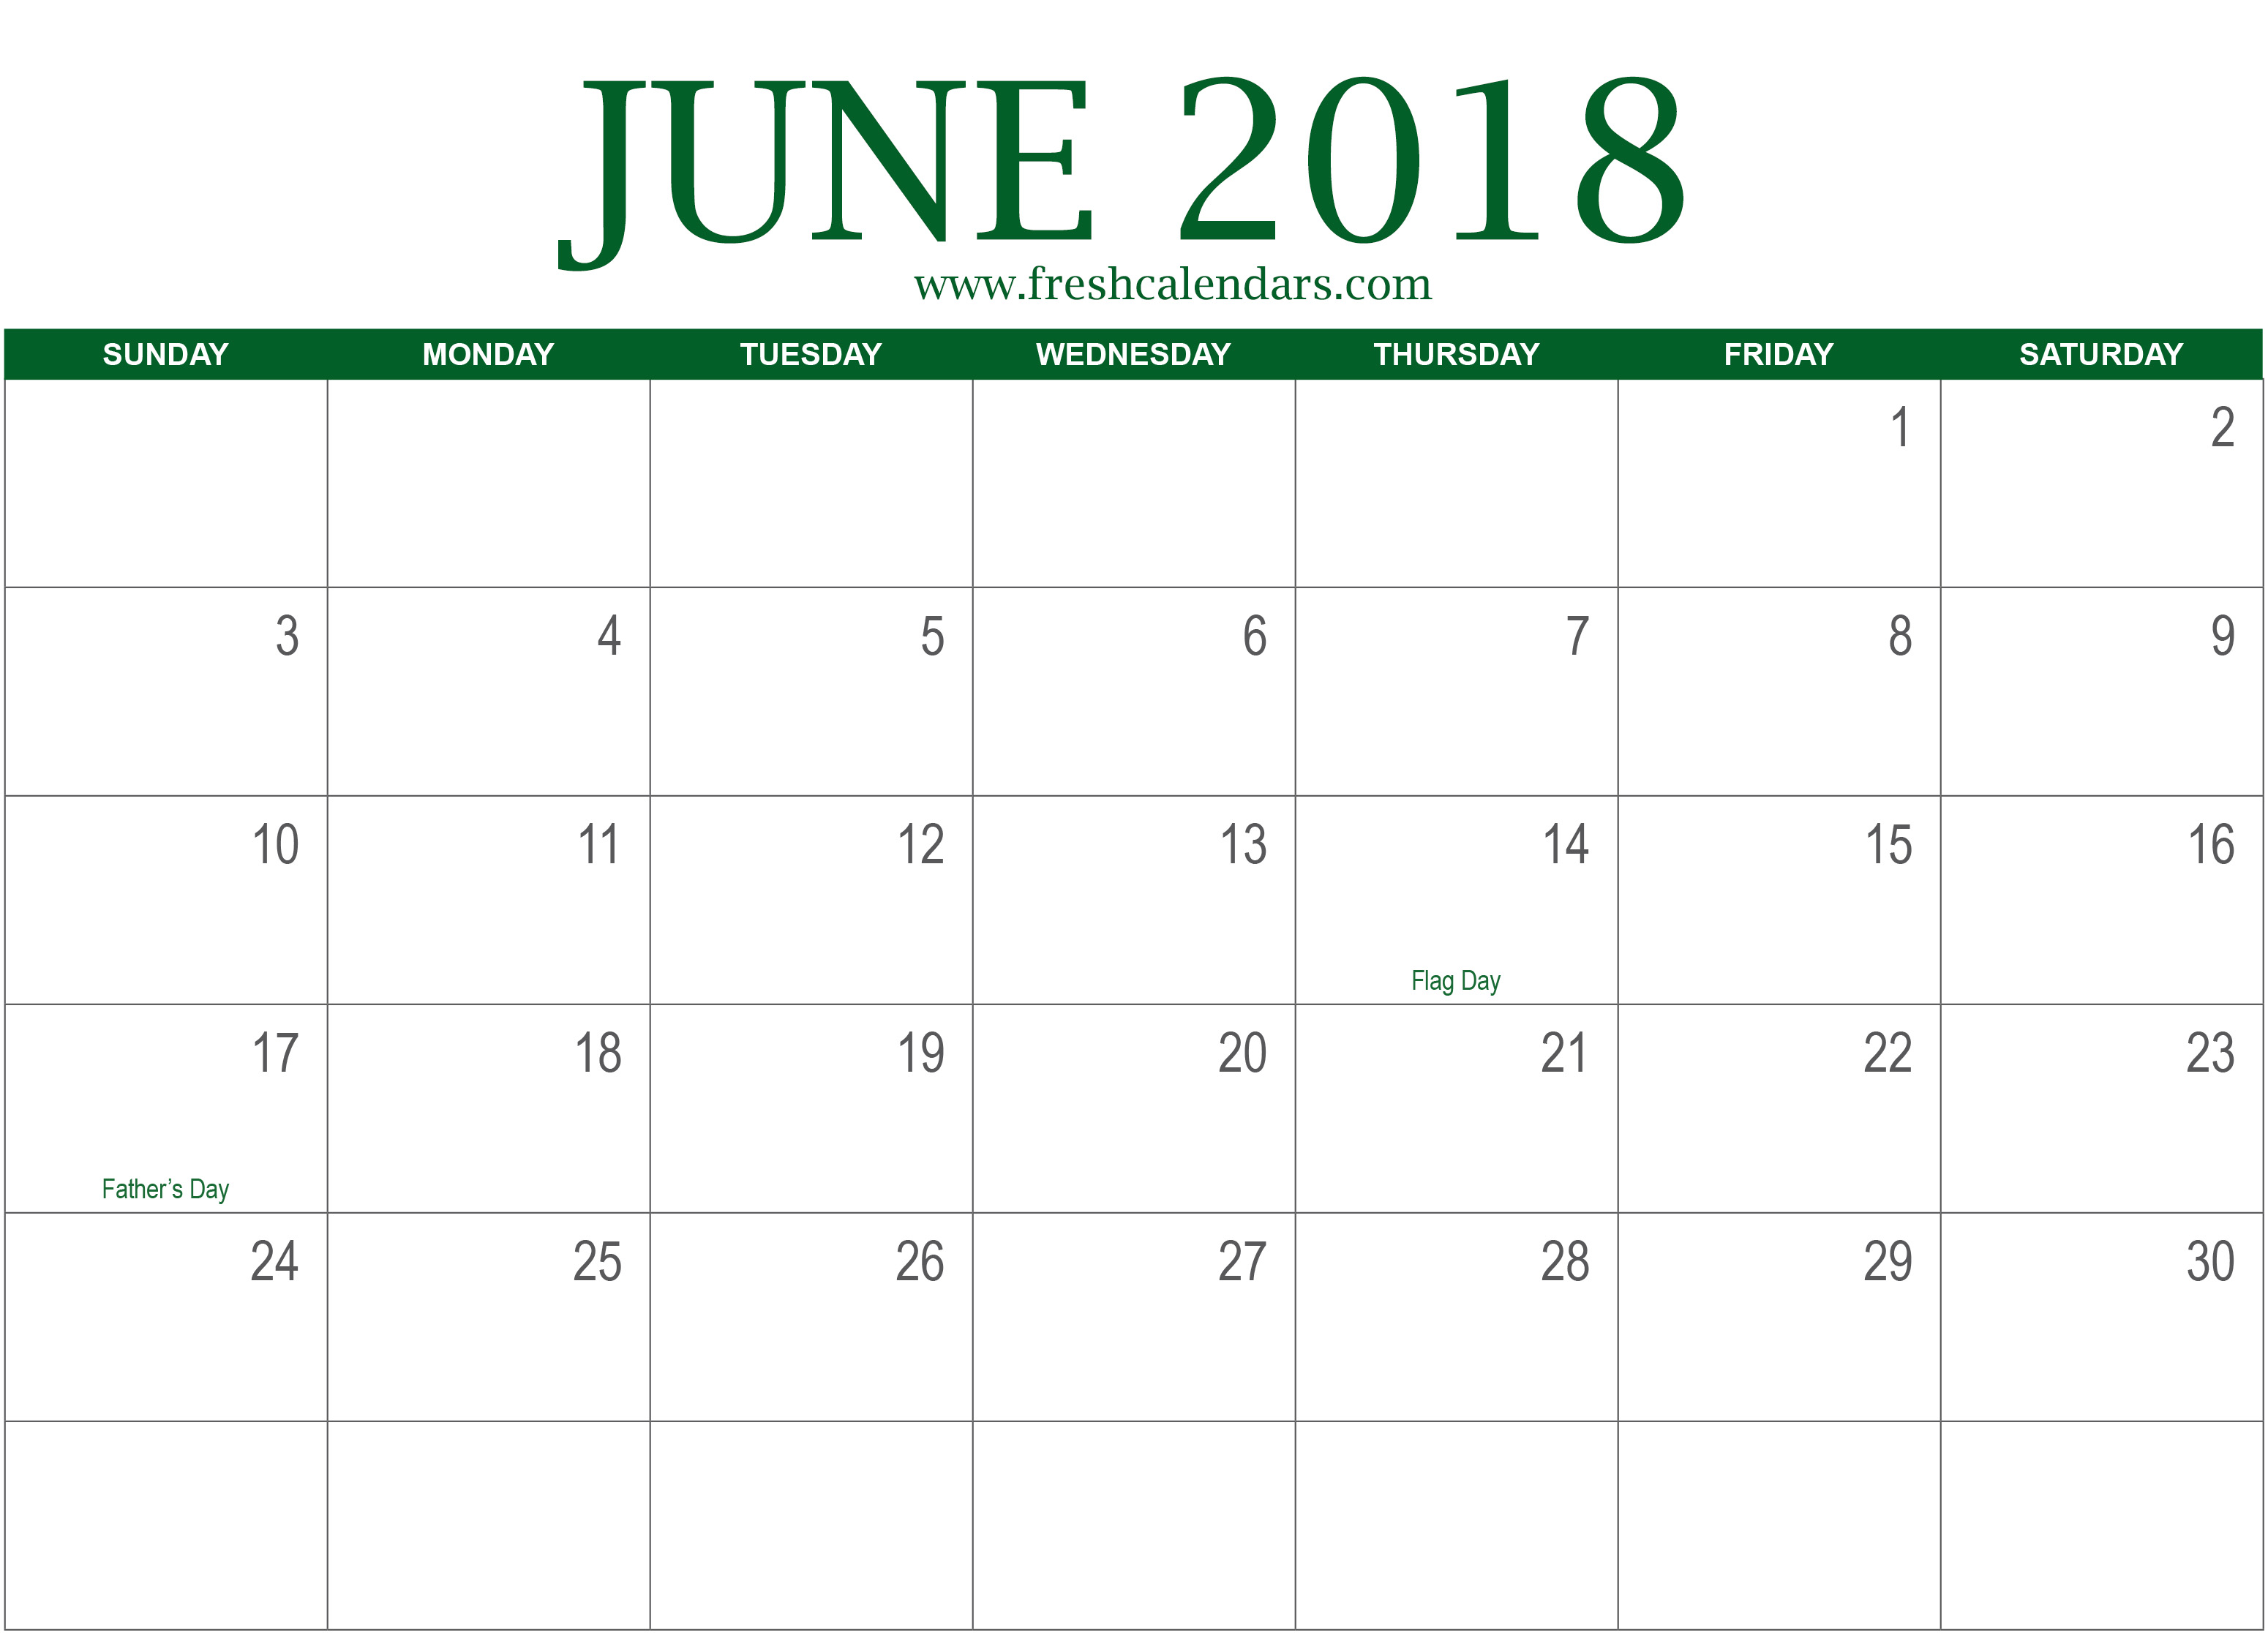 June 2018 Calendar Printable With Holidays